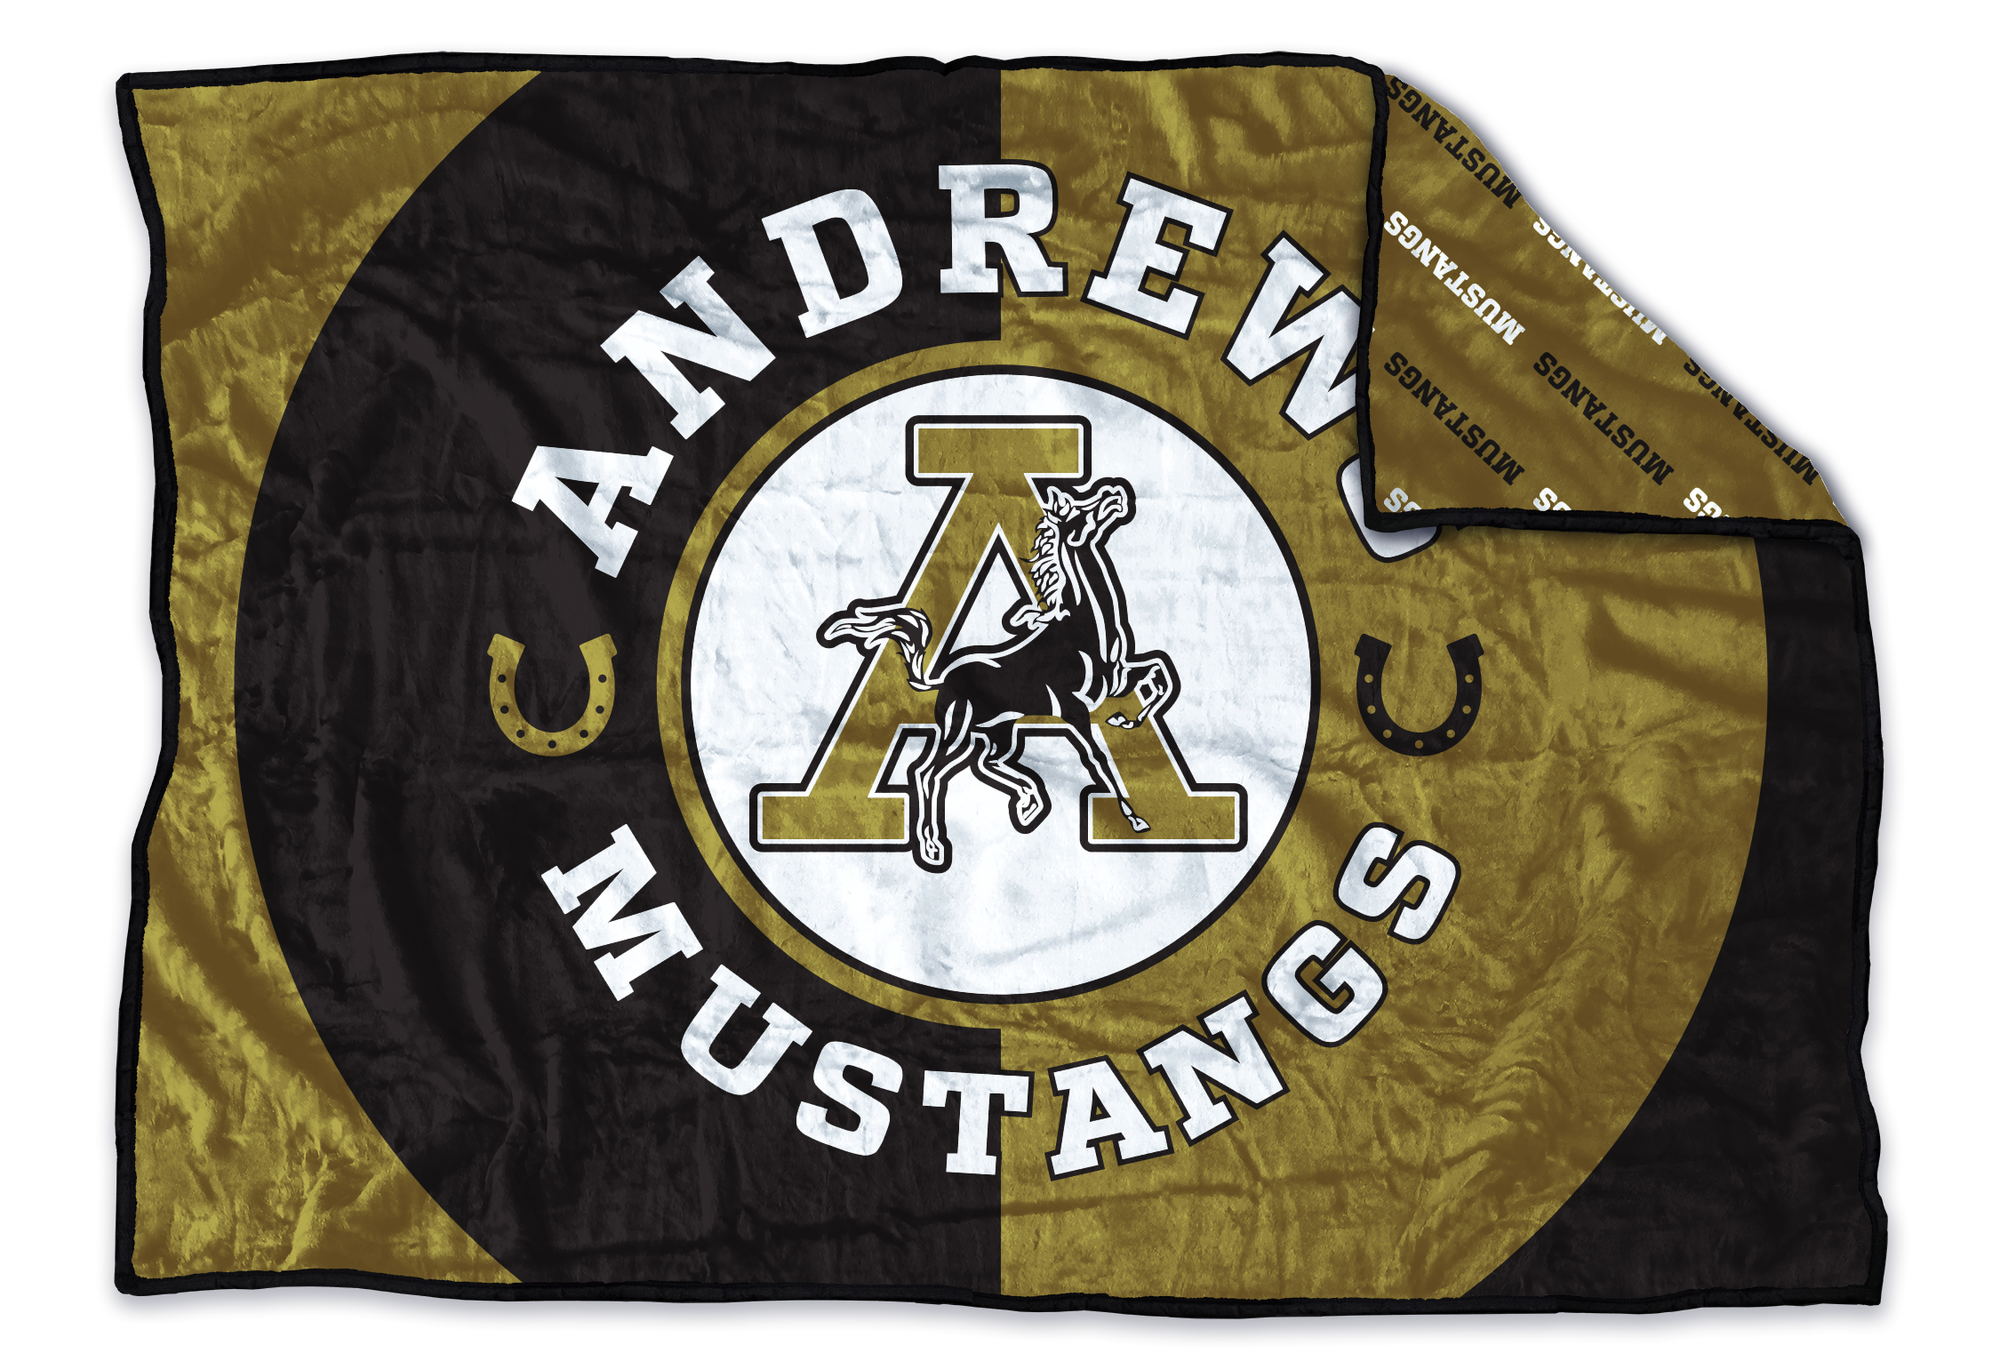 Andrews Mustangs